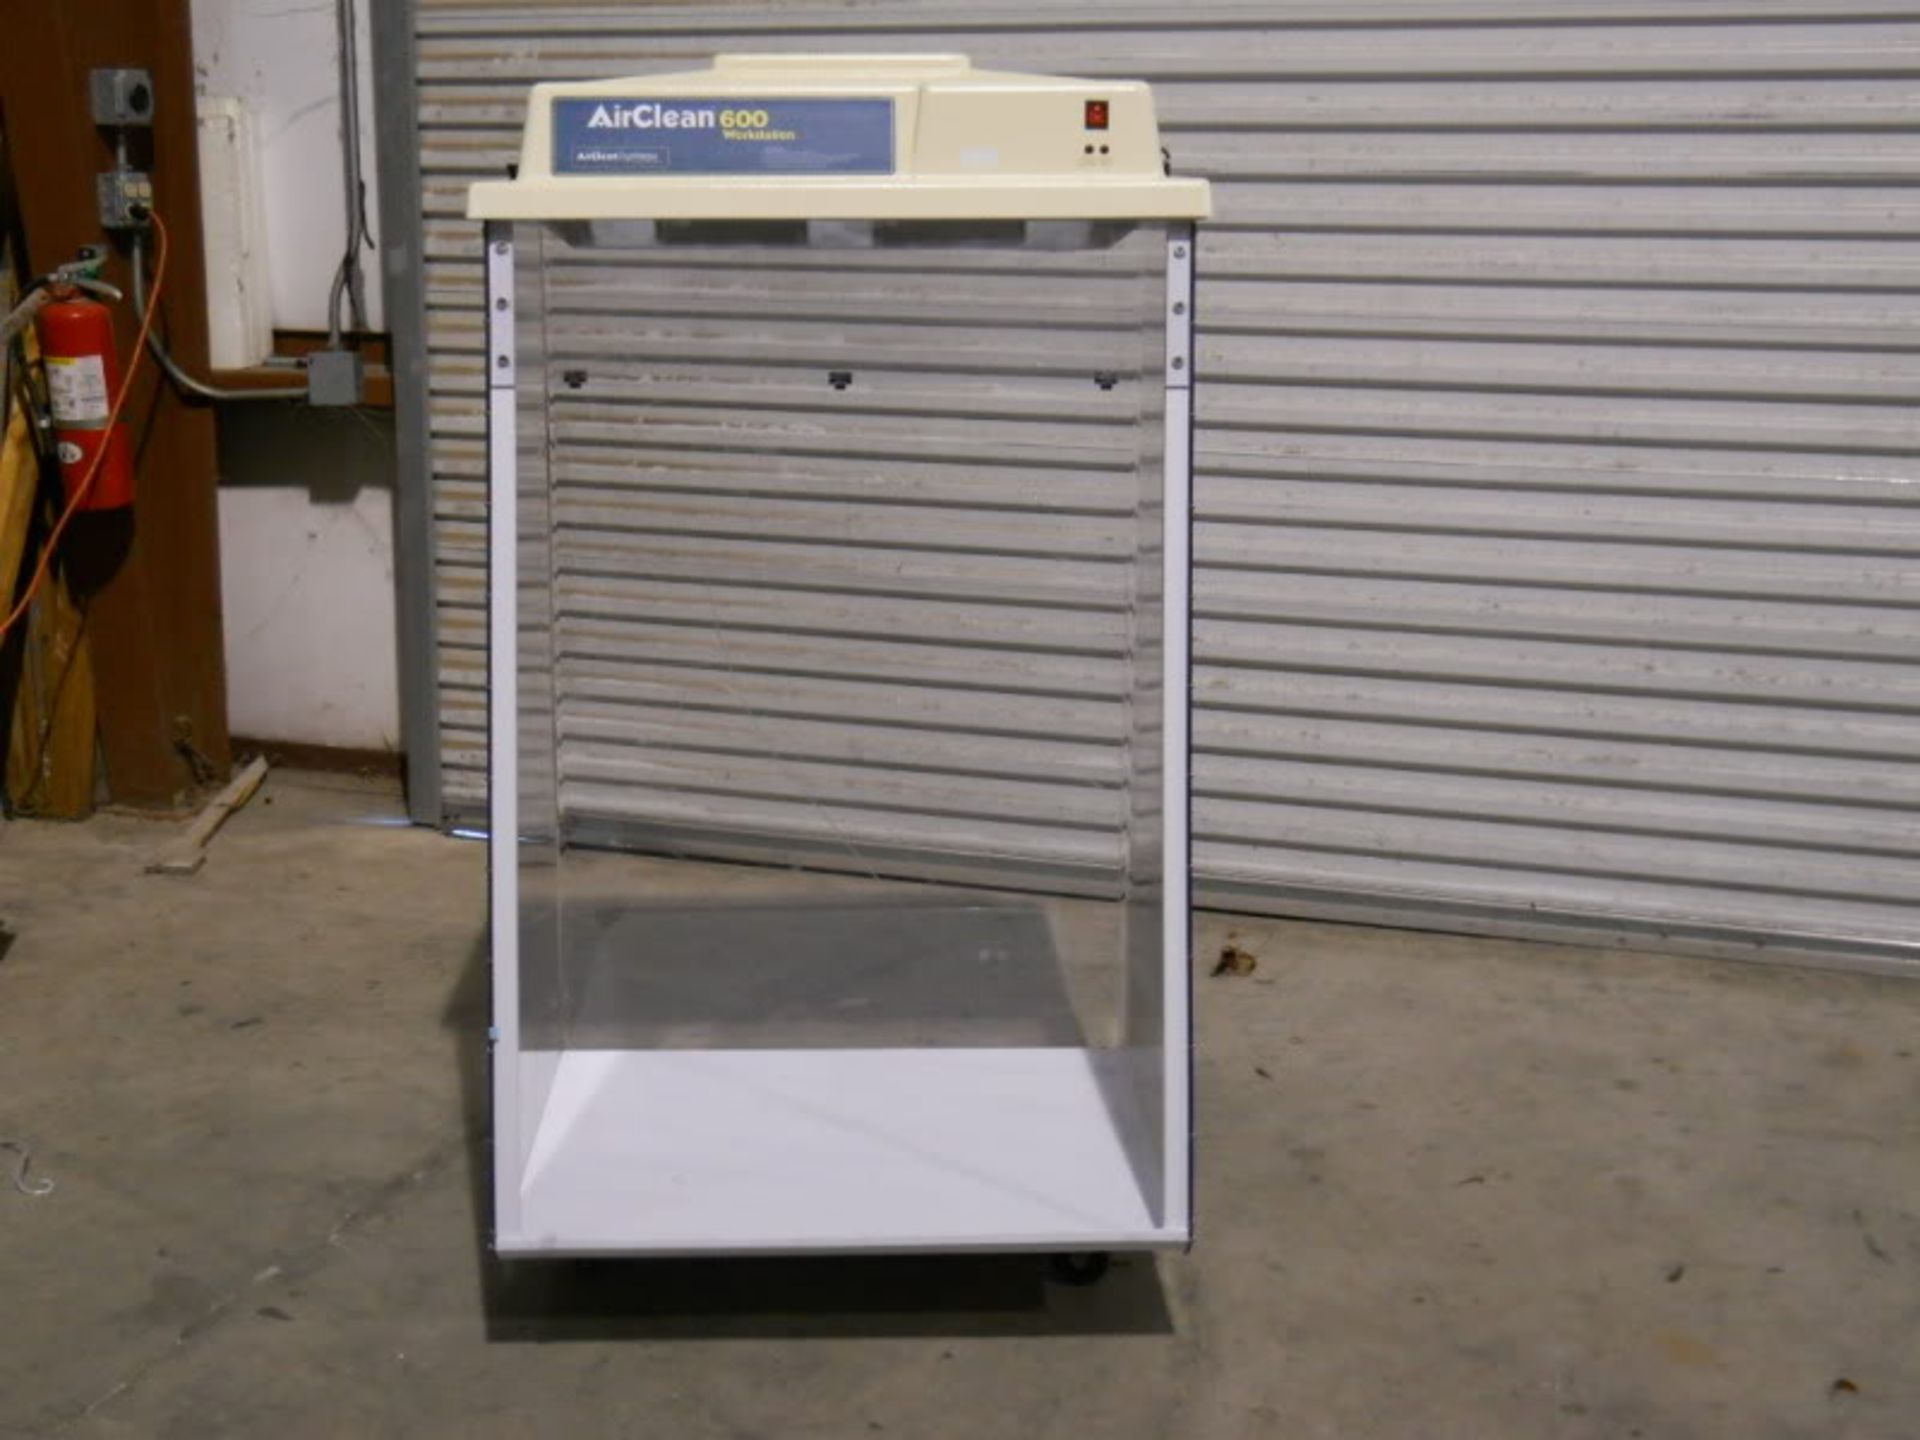 AirClean 600 Workstation "Air Clean Systems" Model AC600T, Qty 1, 330803694641